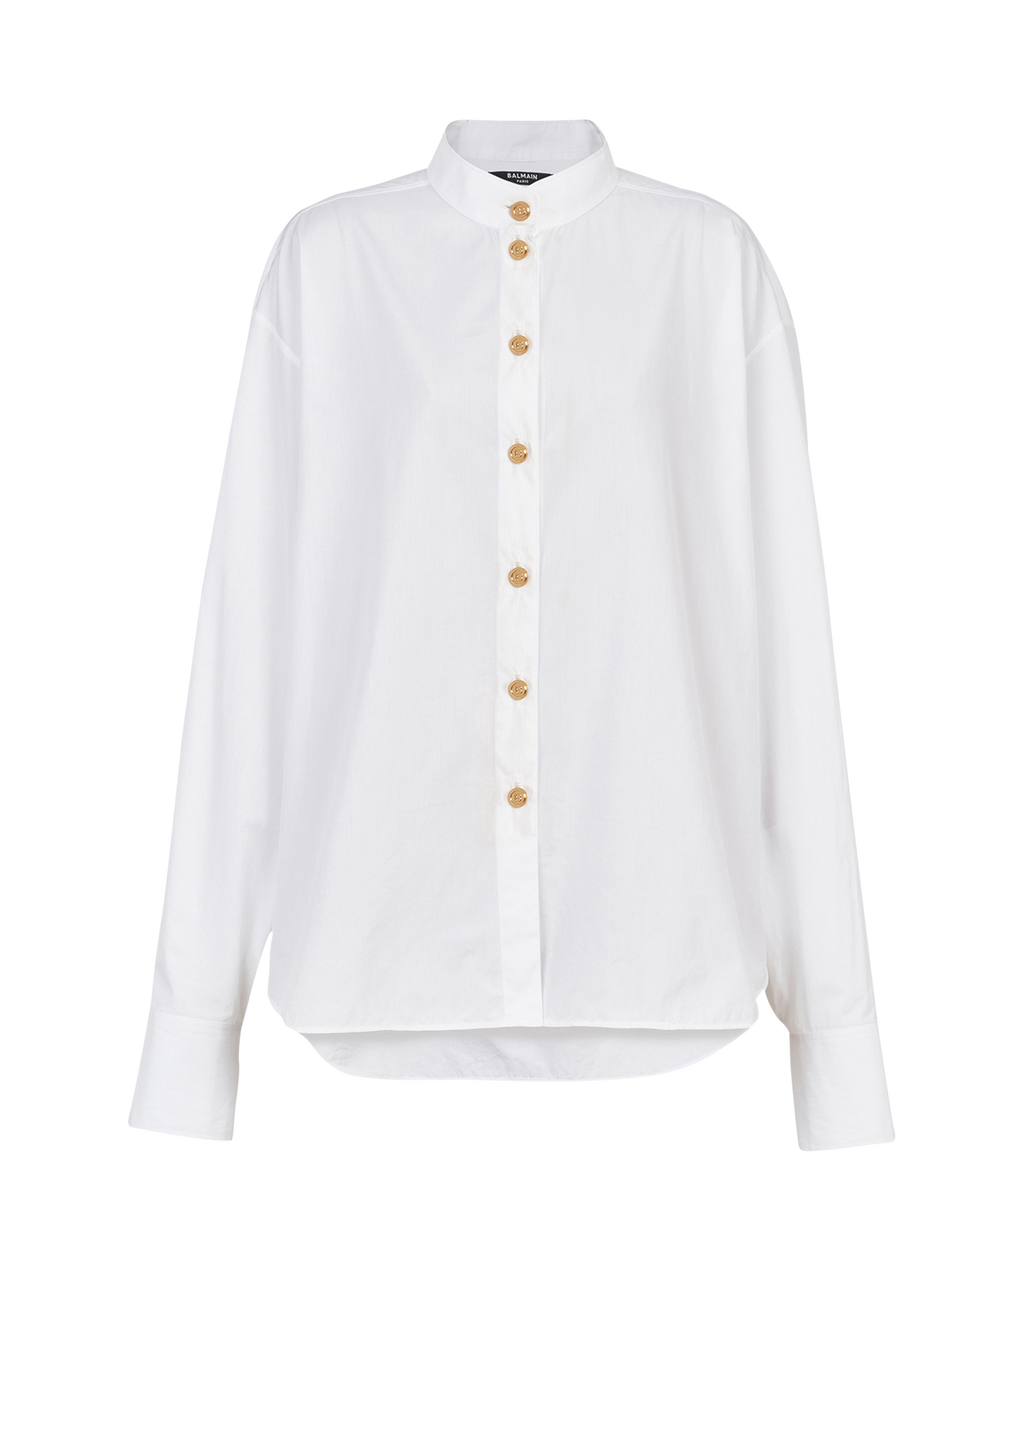 彩色真丝衬衫, white, hi-res